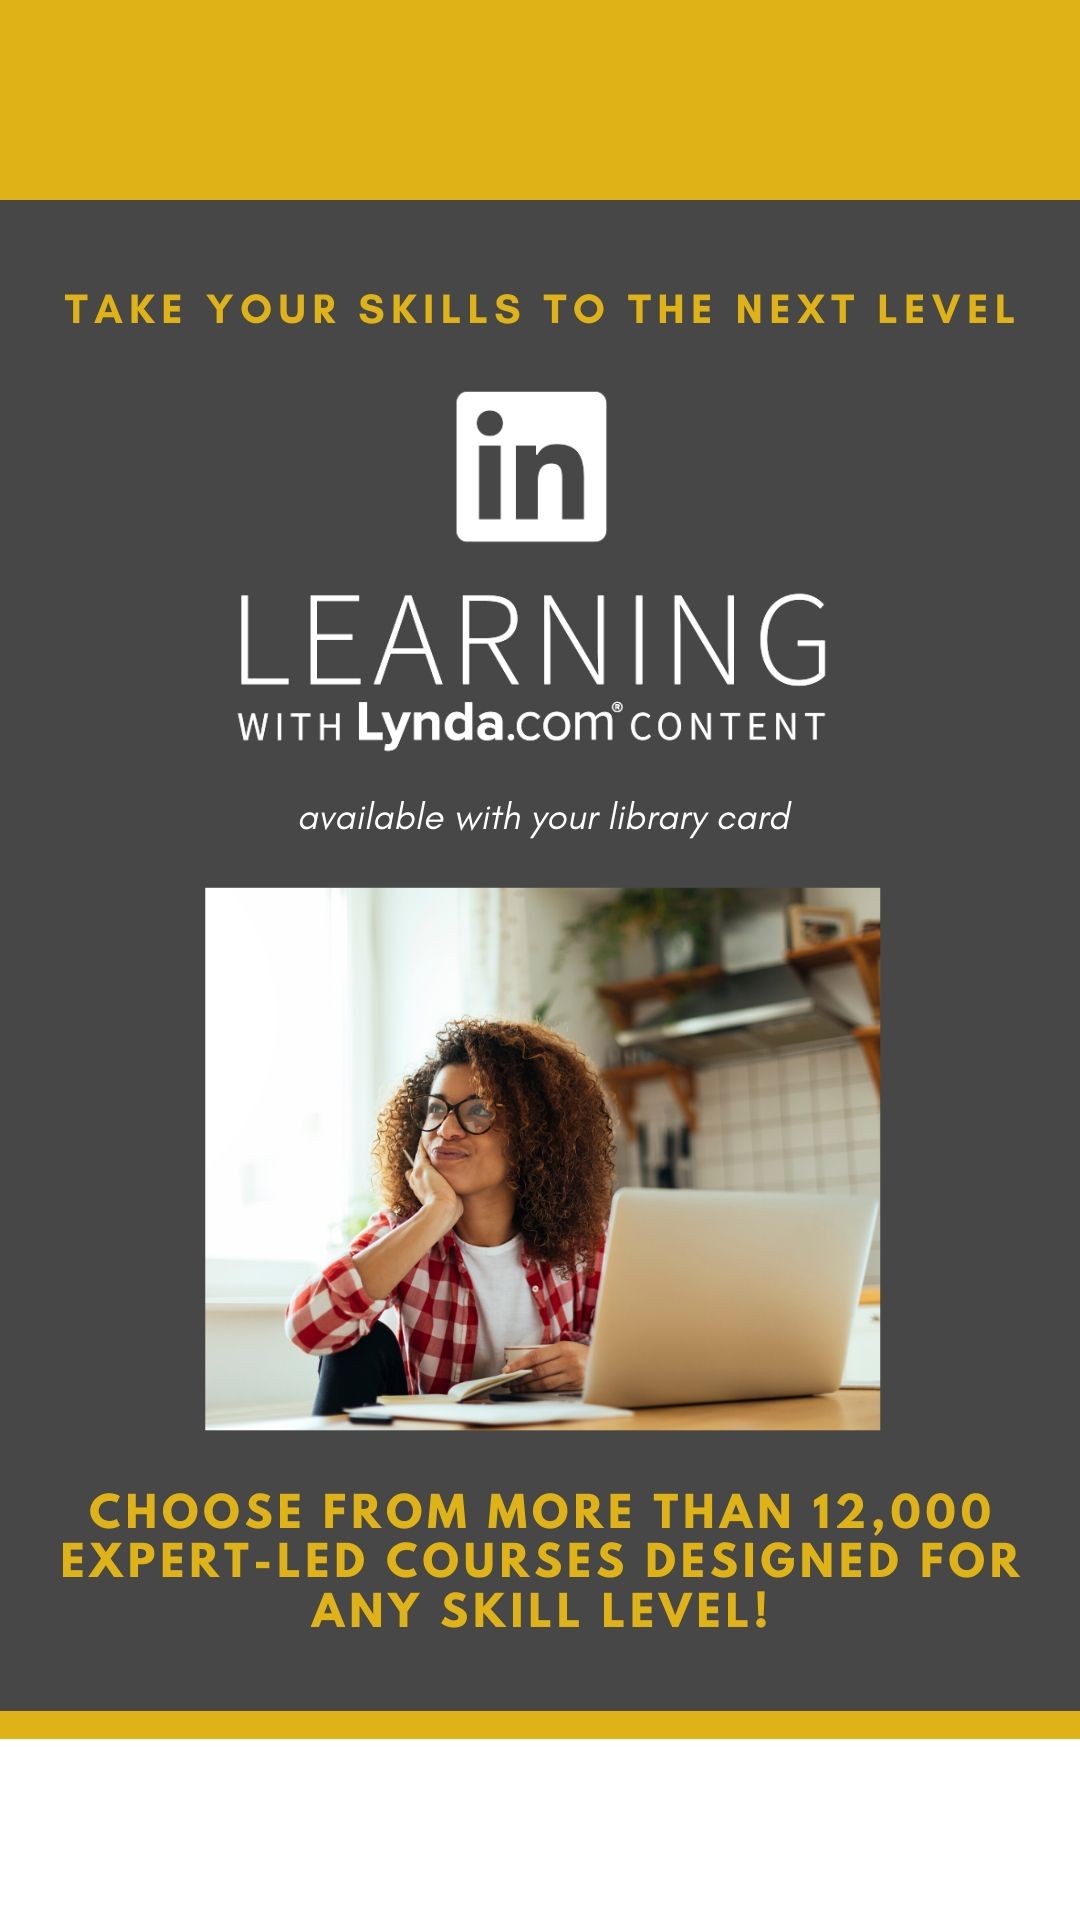 Image for promoting LinkedIn Learning on Instagram Stories